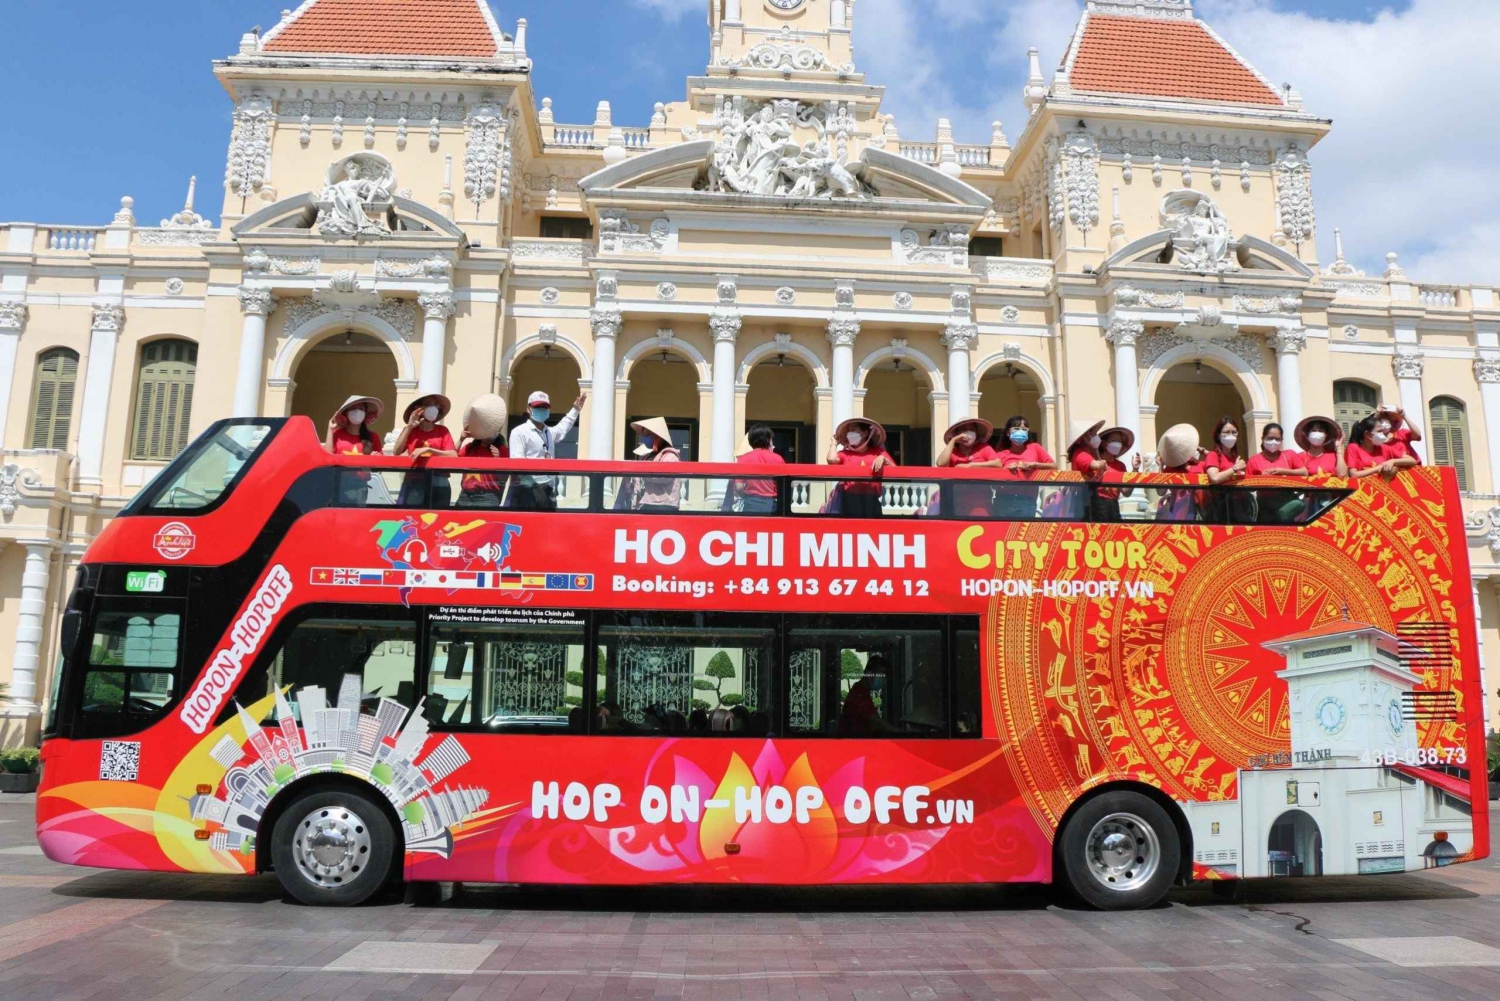 Città di Ho Chi Minh: tour di 4 ore in autobus Hop-on Hop-off